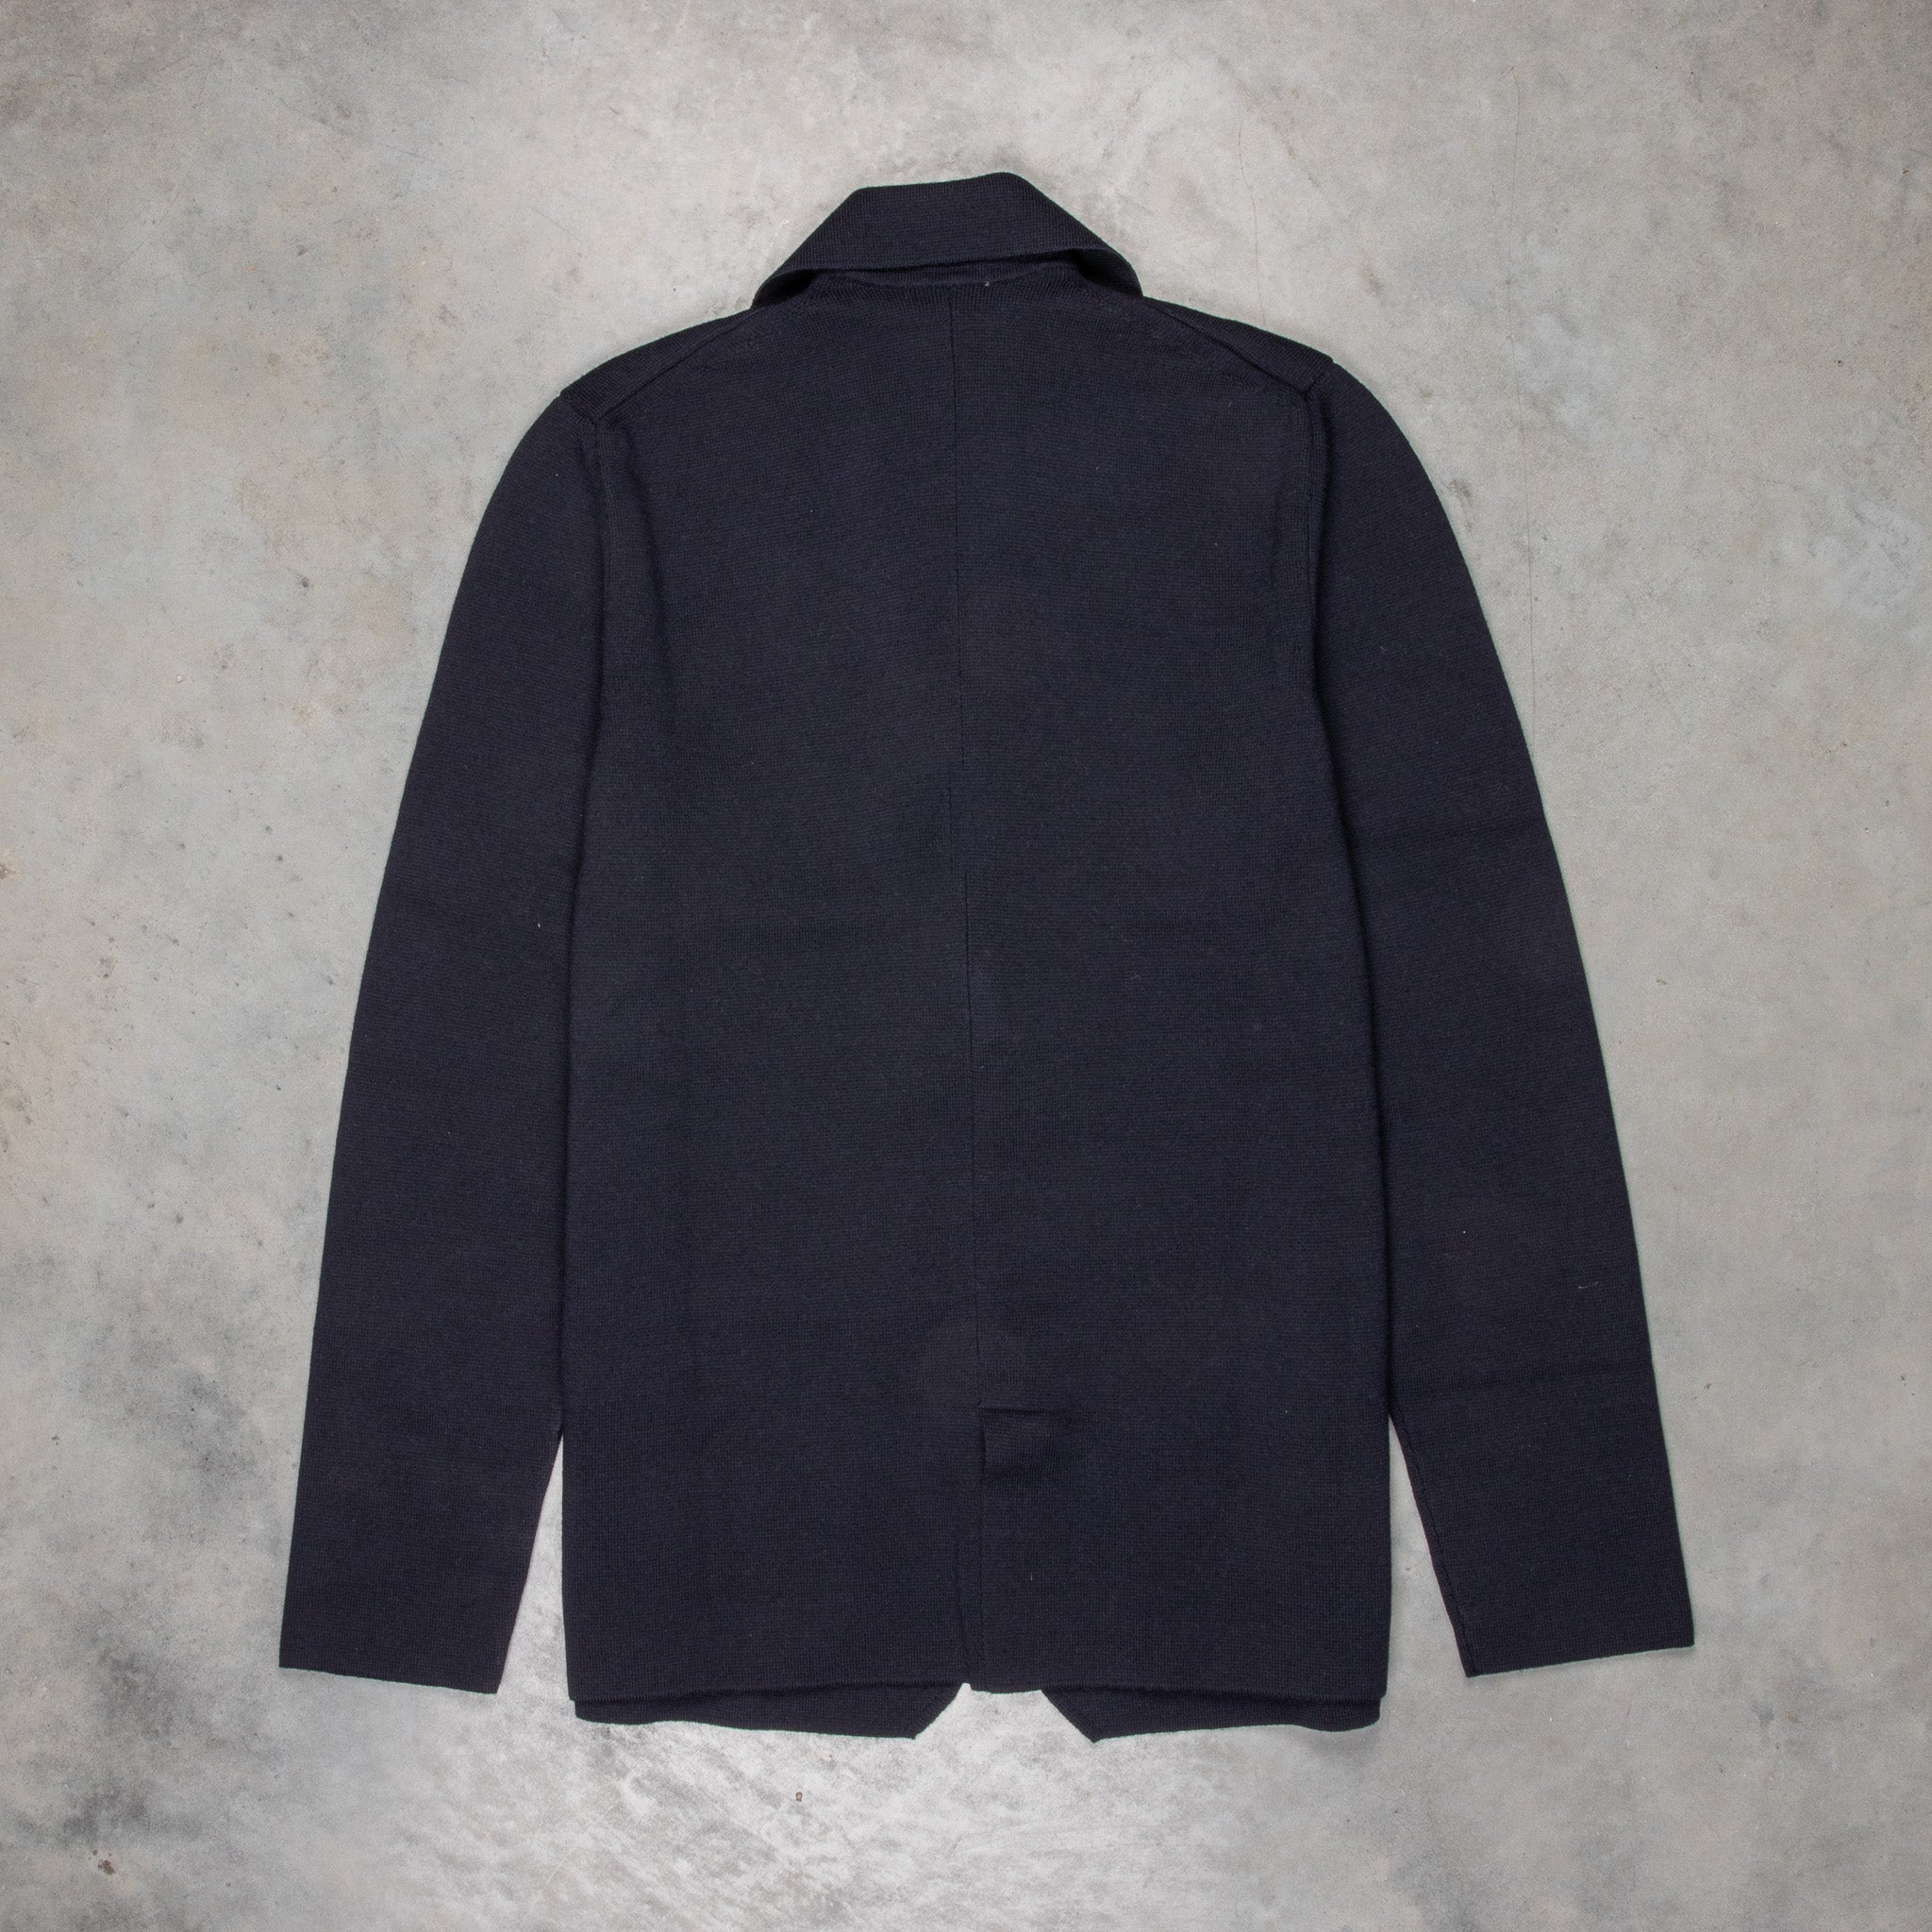 Drumohr Knitted Jacket Merino Wool Navy Blu